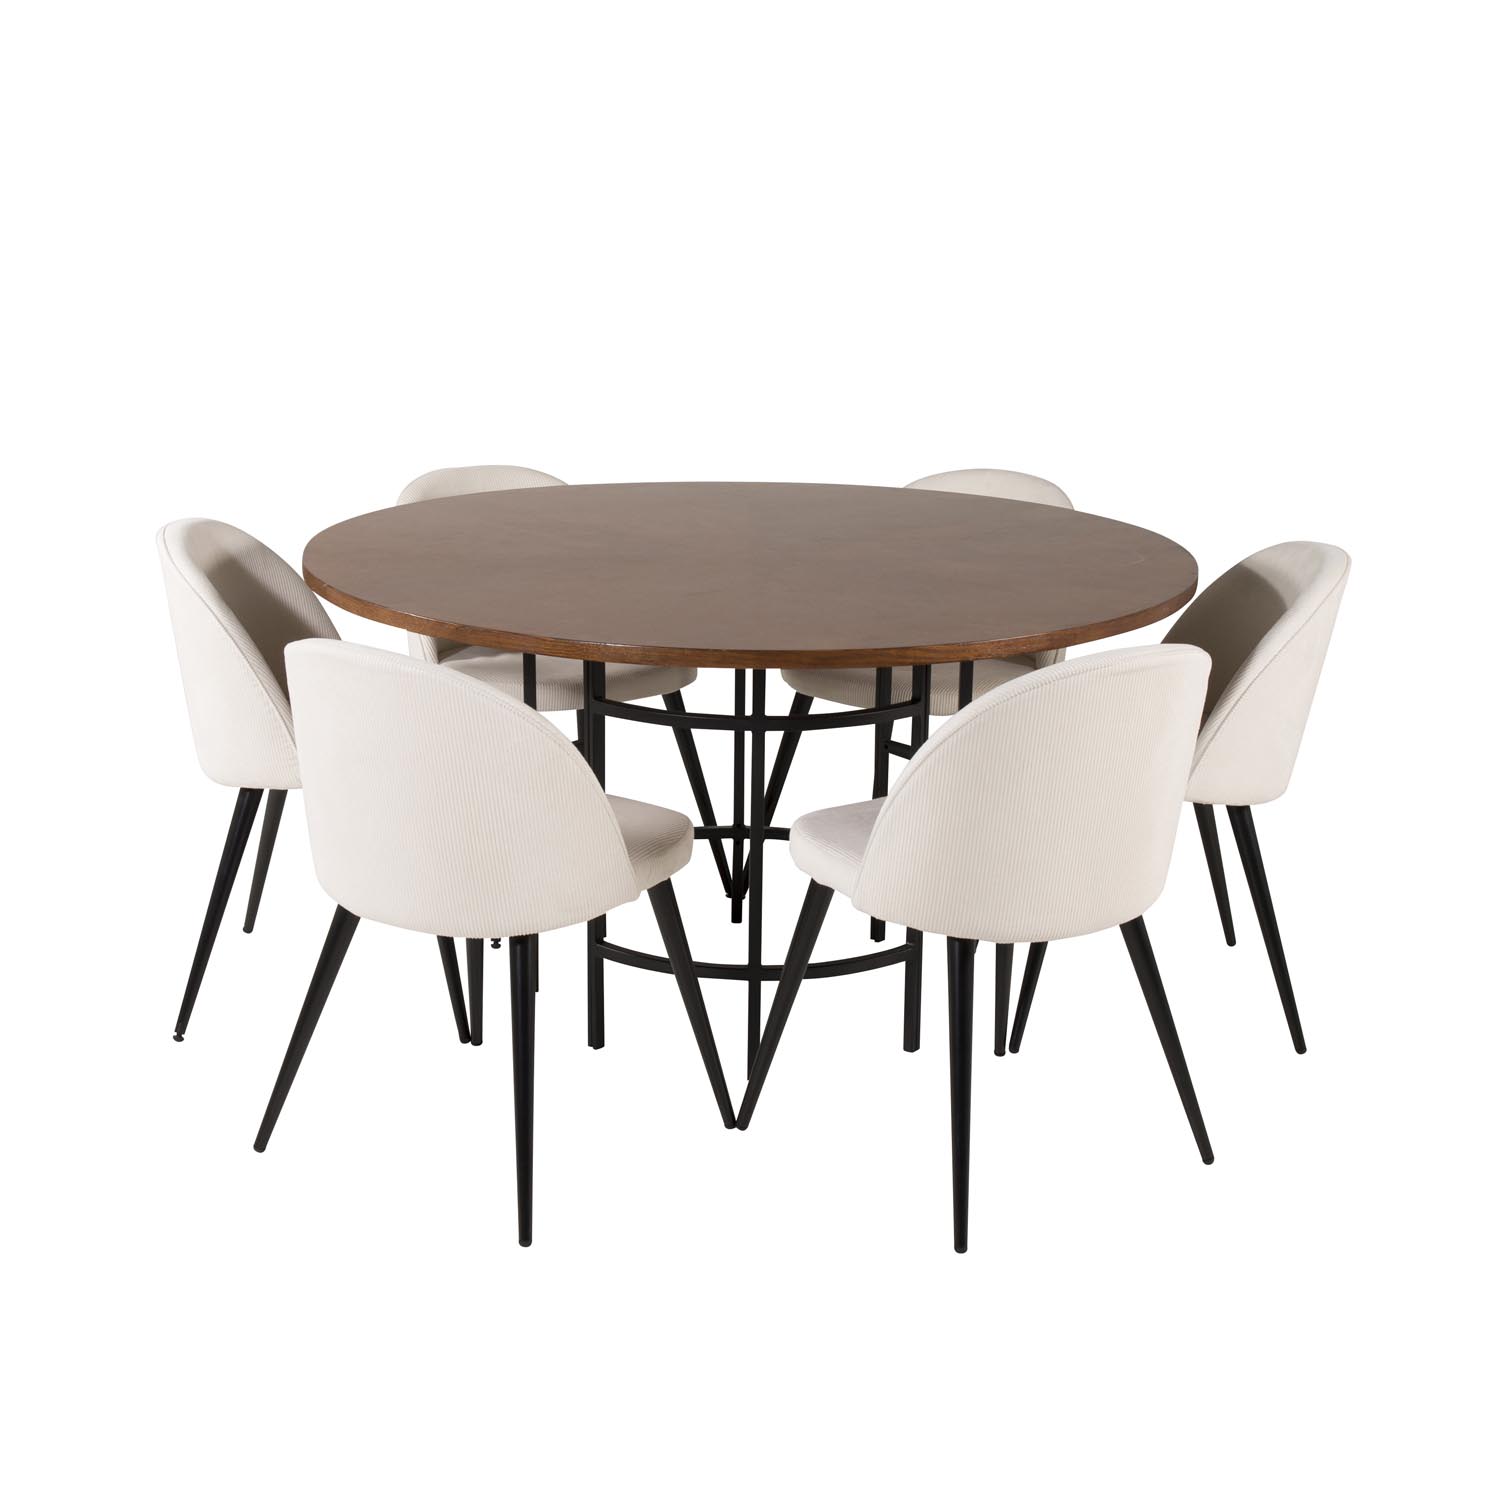 VENTURE DESIGN Copenhagen spisebordssæt, m. 6 stole - brun finer/sort metal, beige fløjl/sort metal